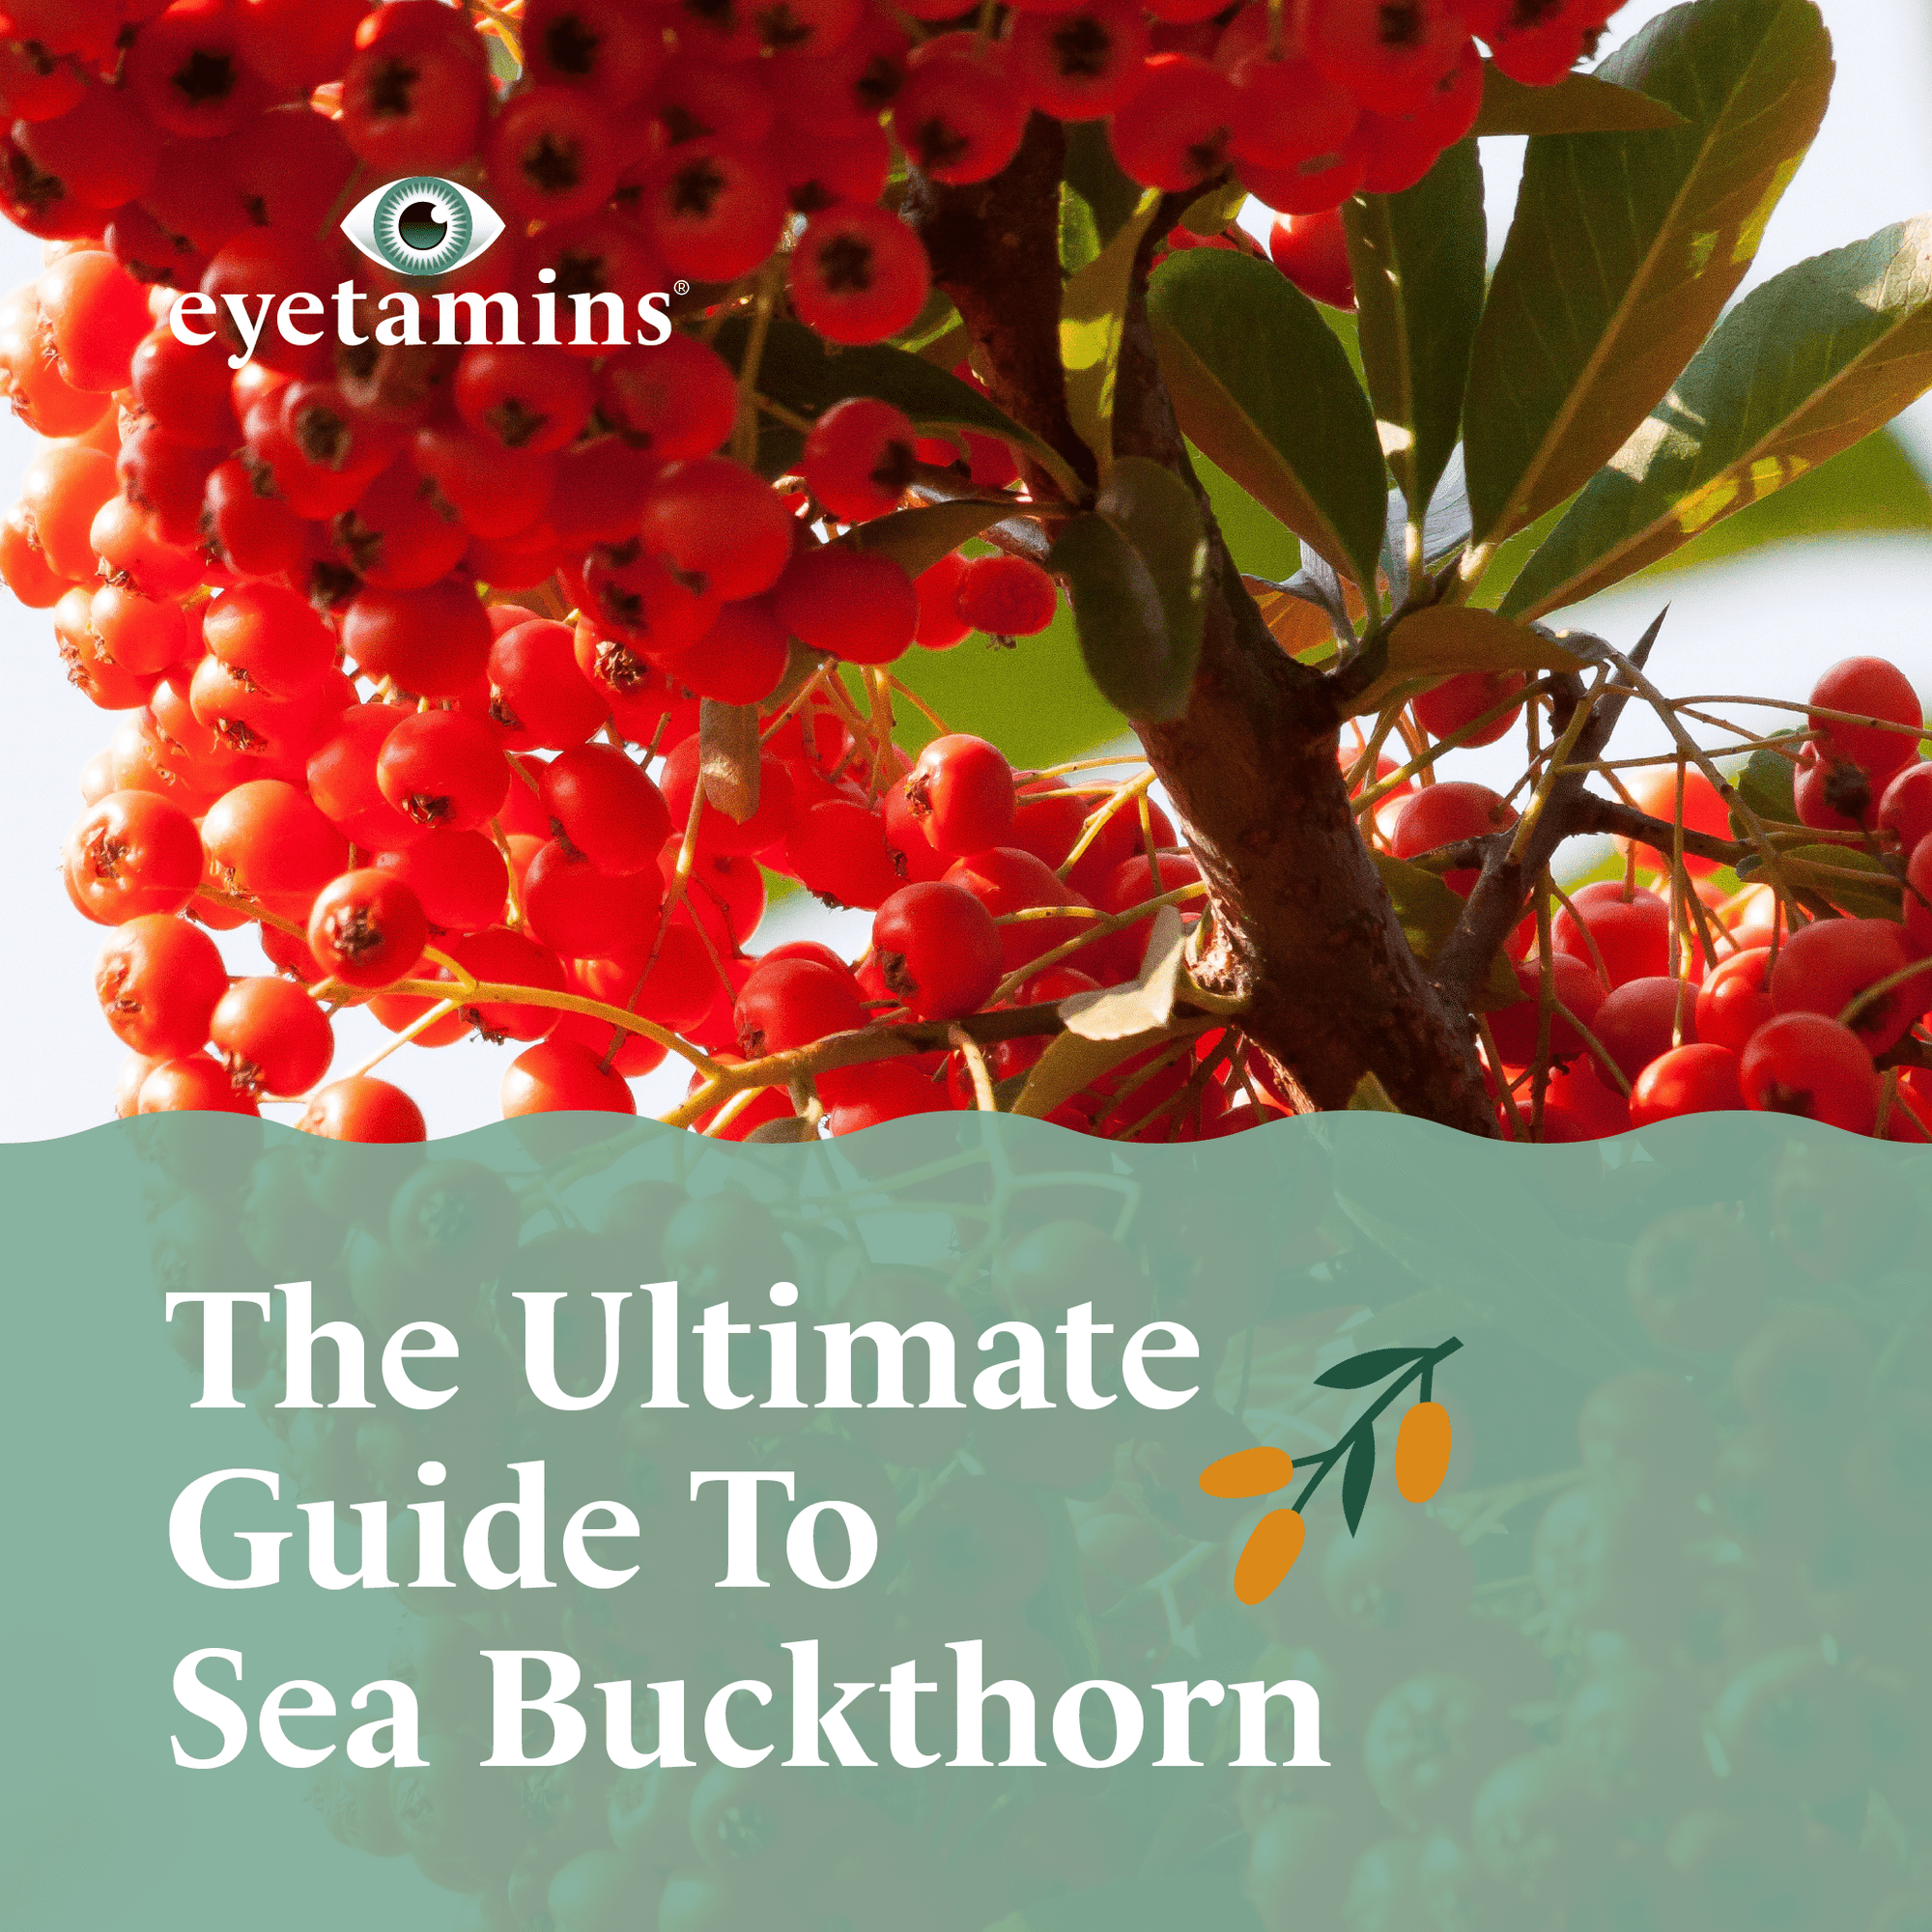 Eyetamins - The Ultimate Guide To Sea Buckthorn